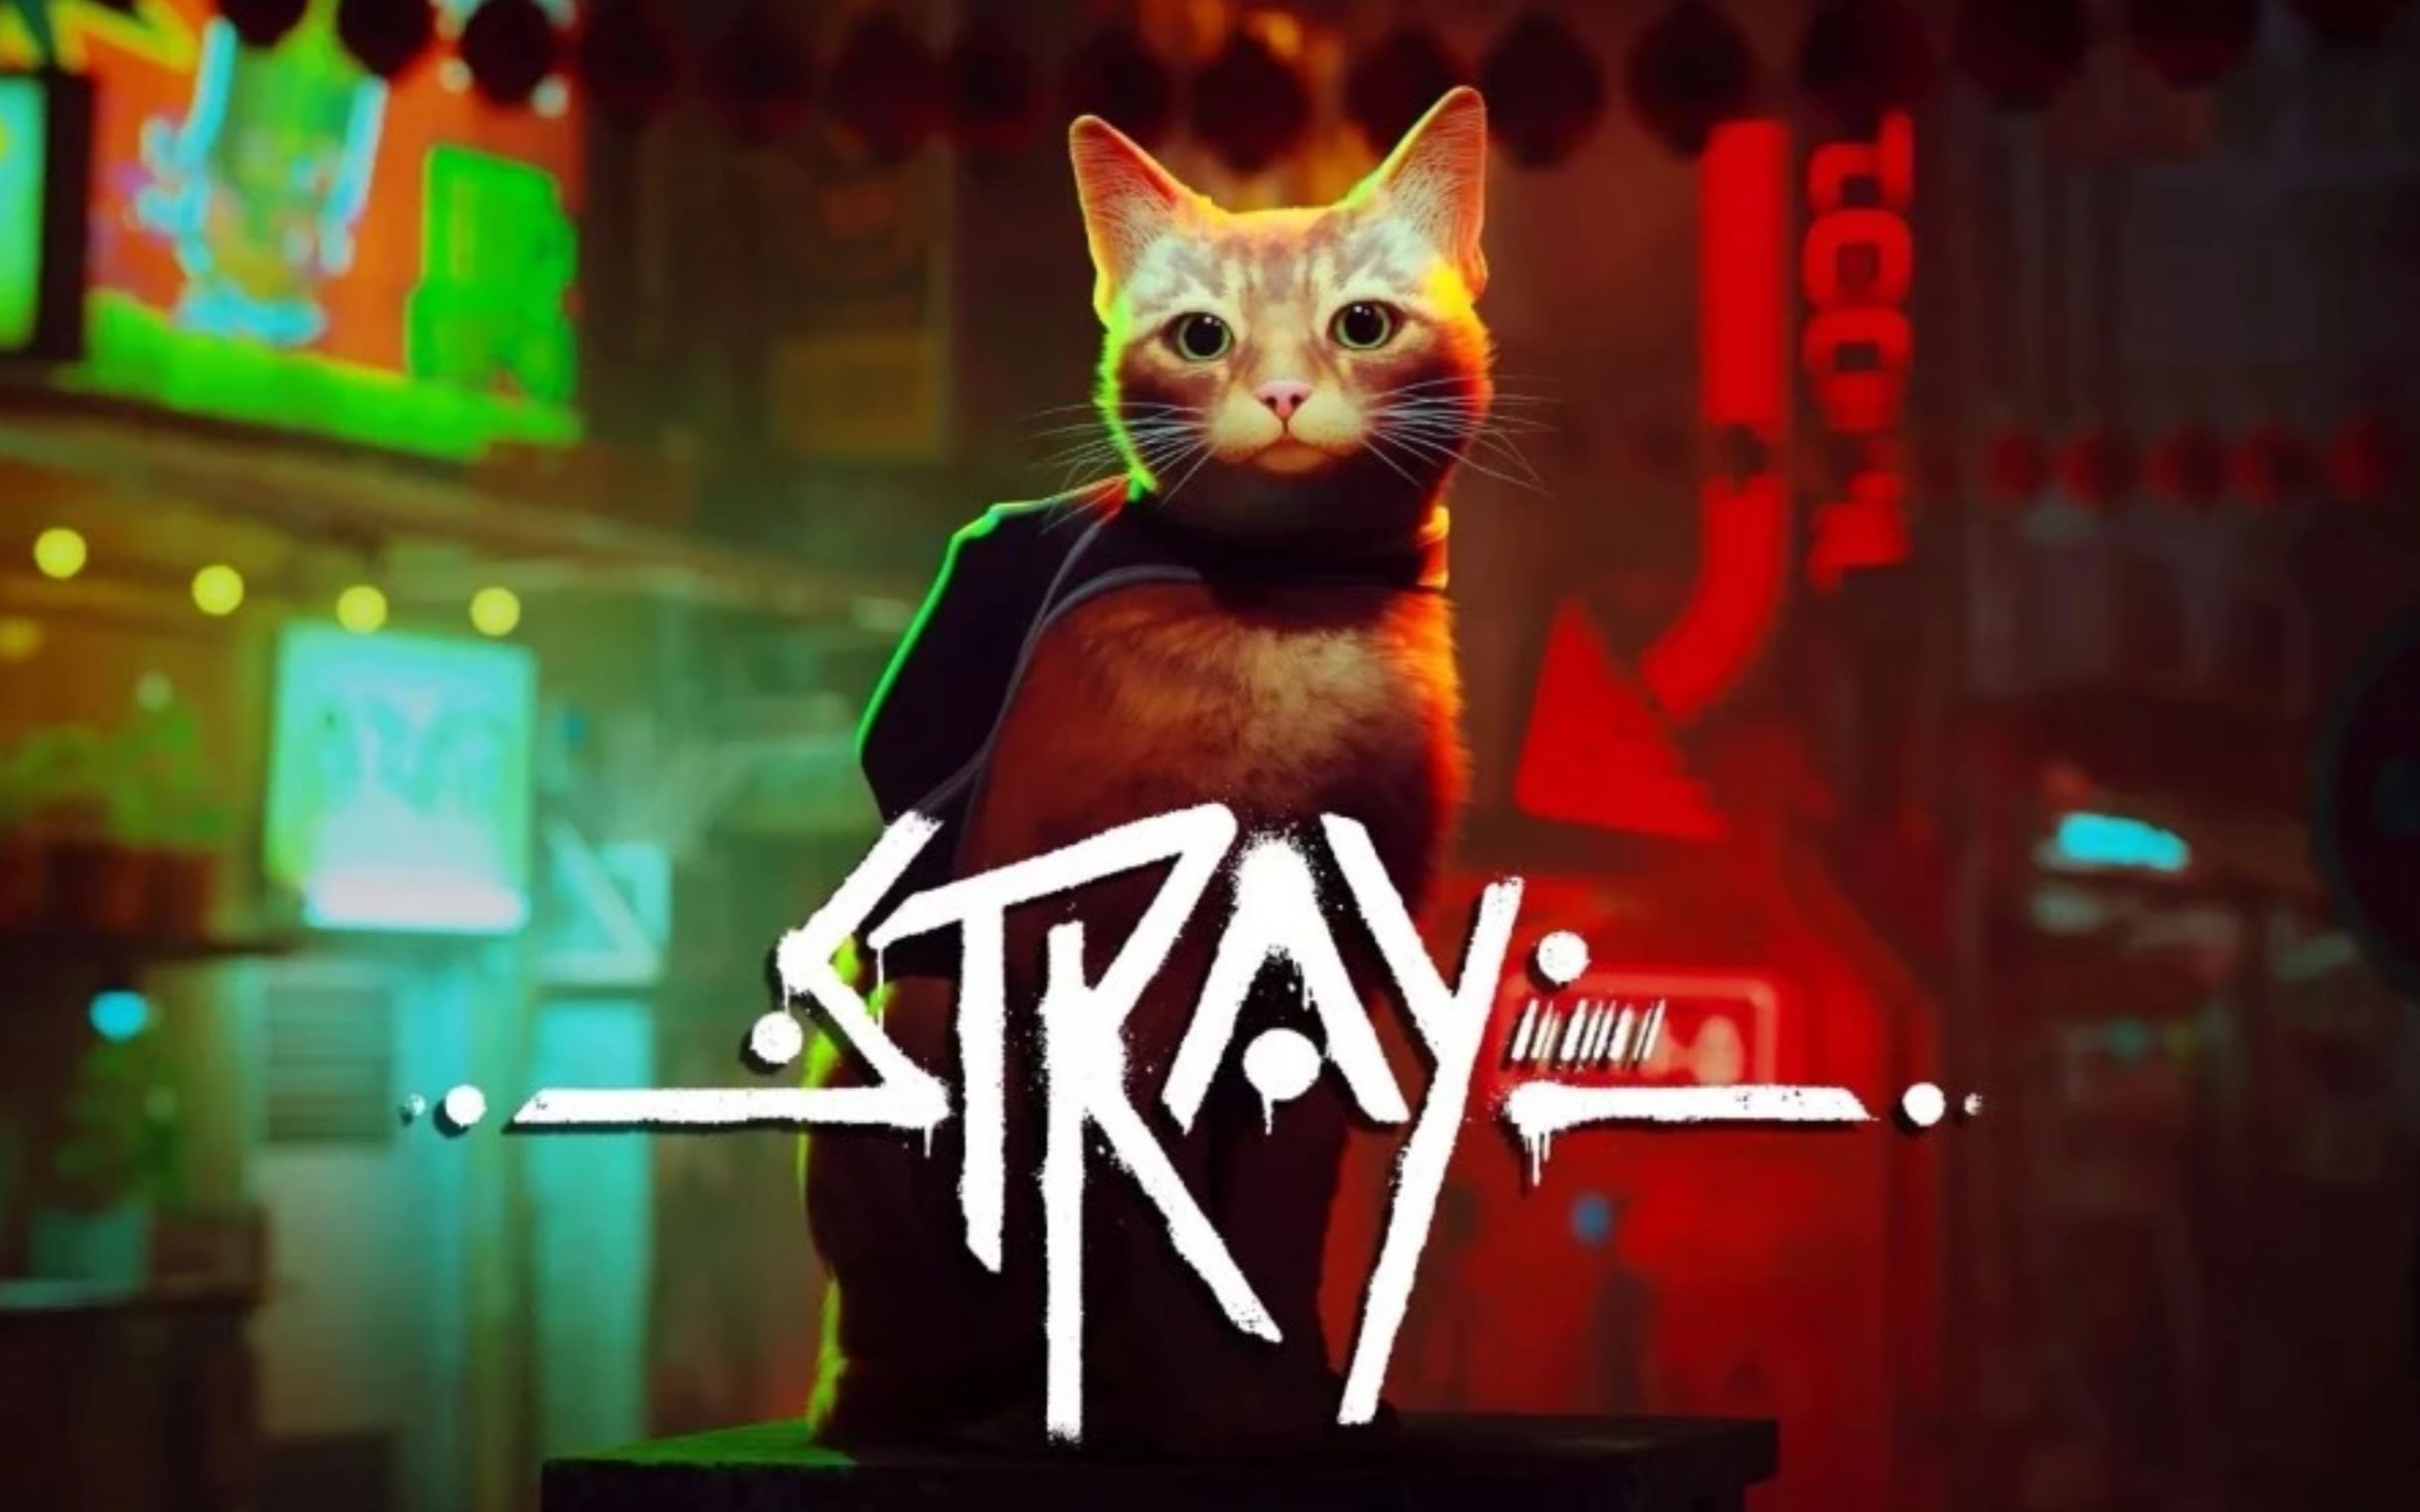 beware of stray cats图片